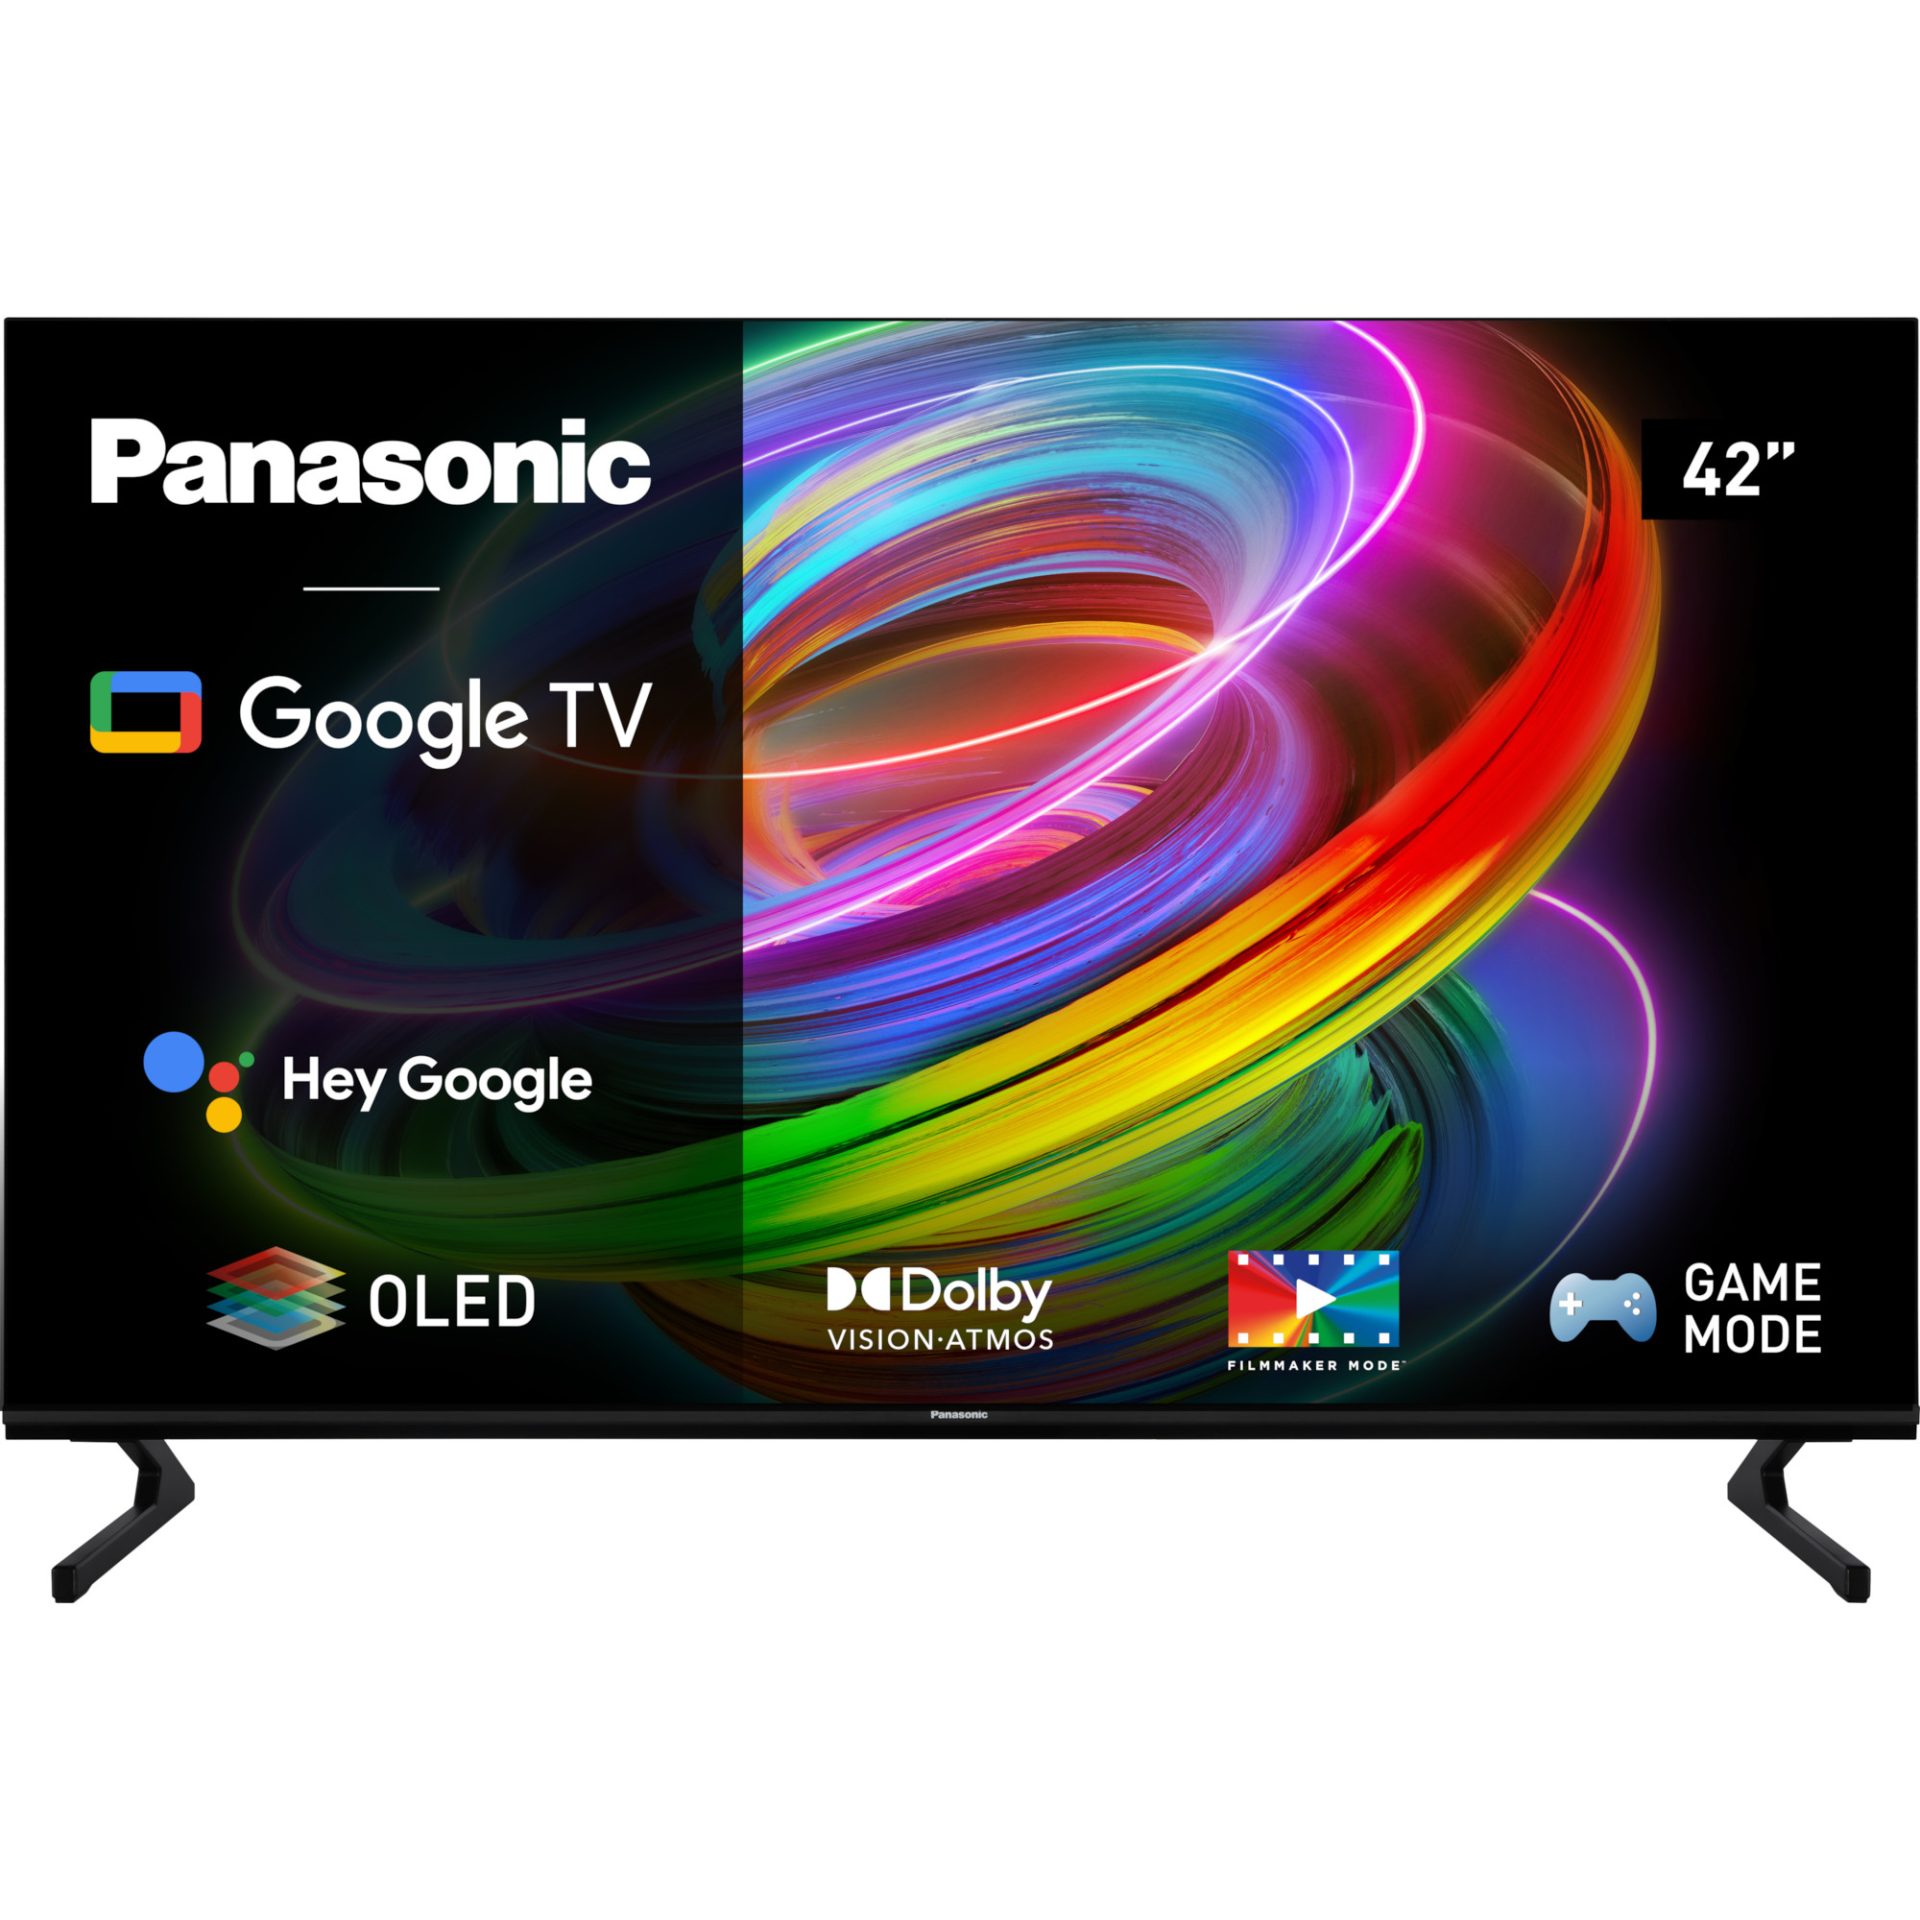 Panasonic TX-42MZ800 OLED 4K Google TV 42